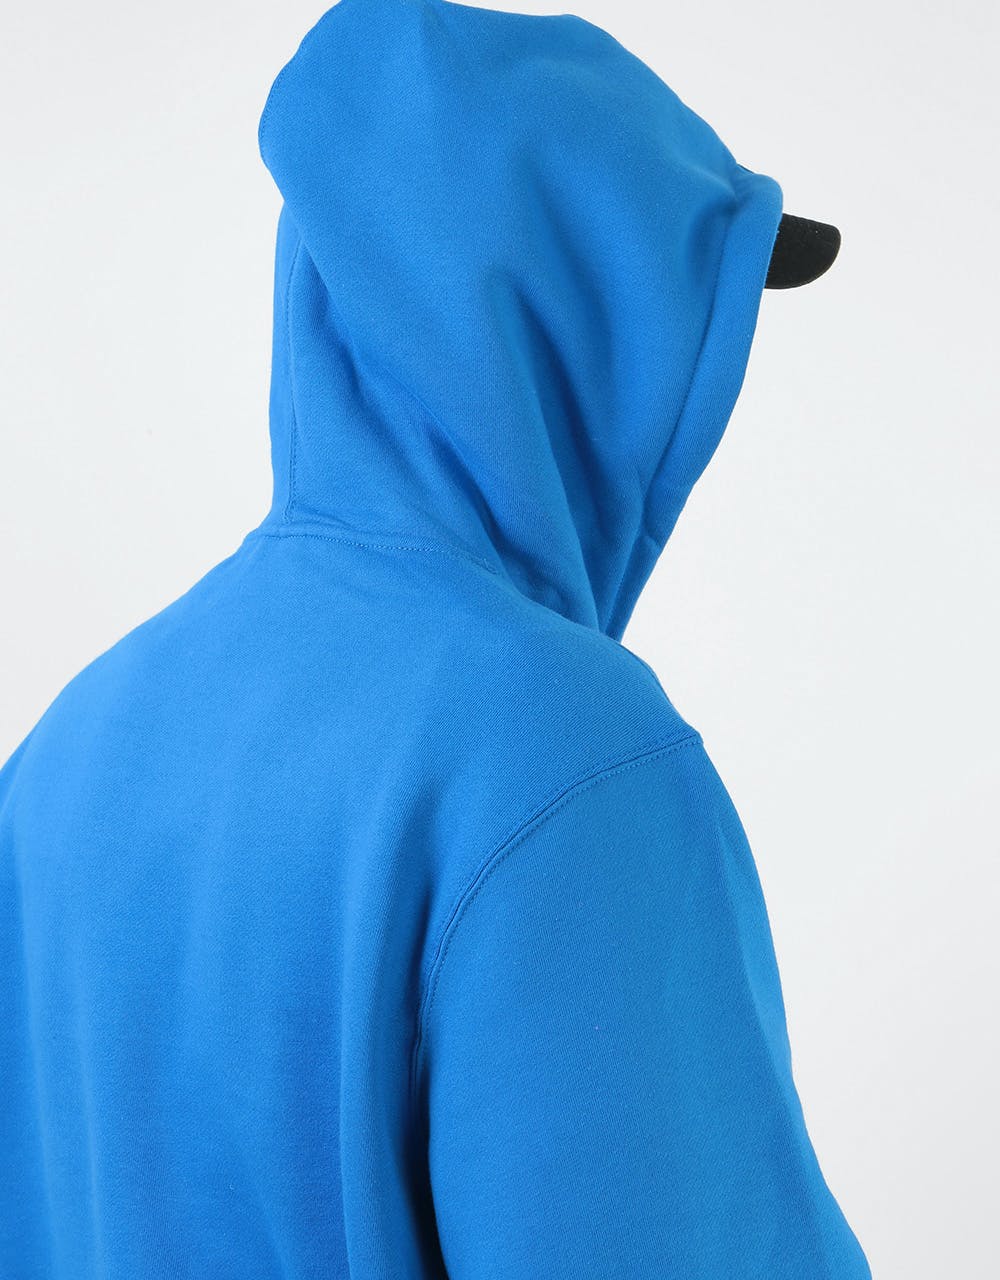 Stüssy Stock Logo Applique Pullover Hoodie - Blue